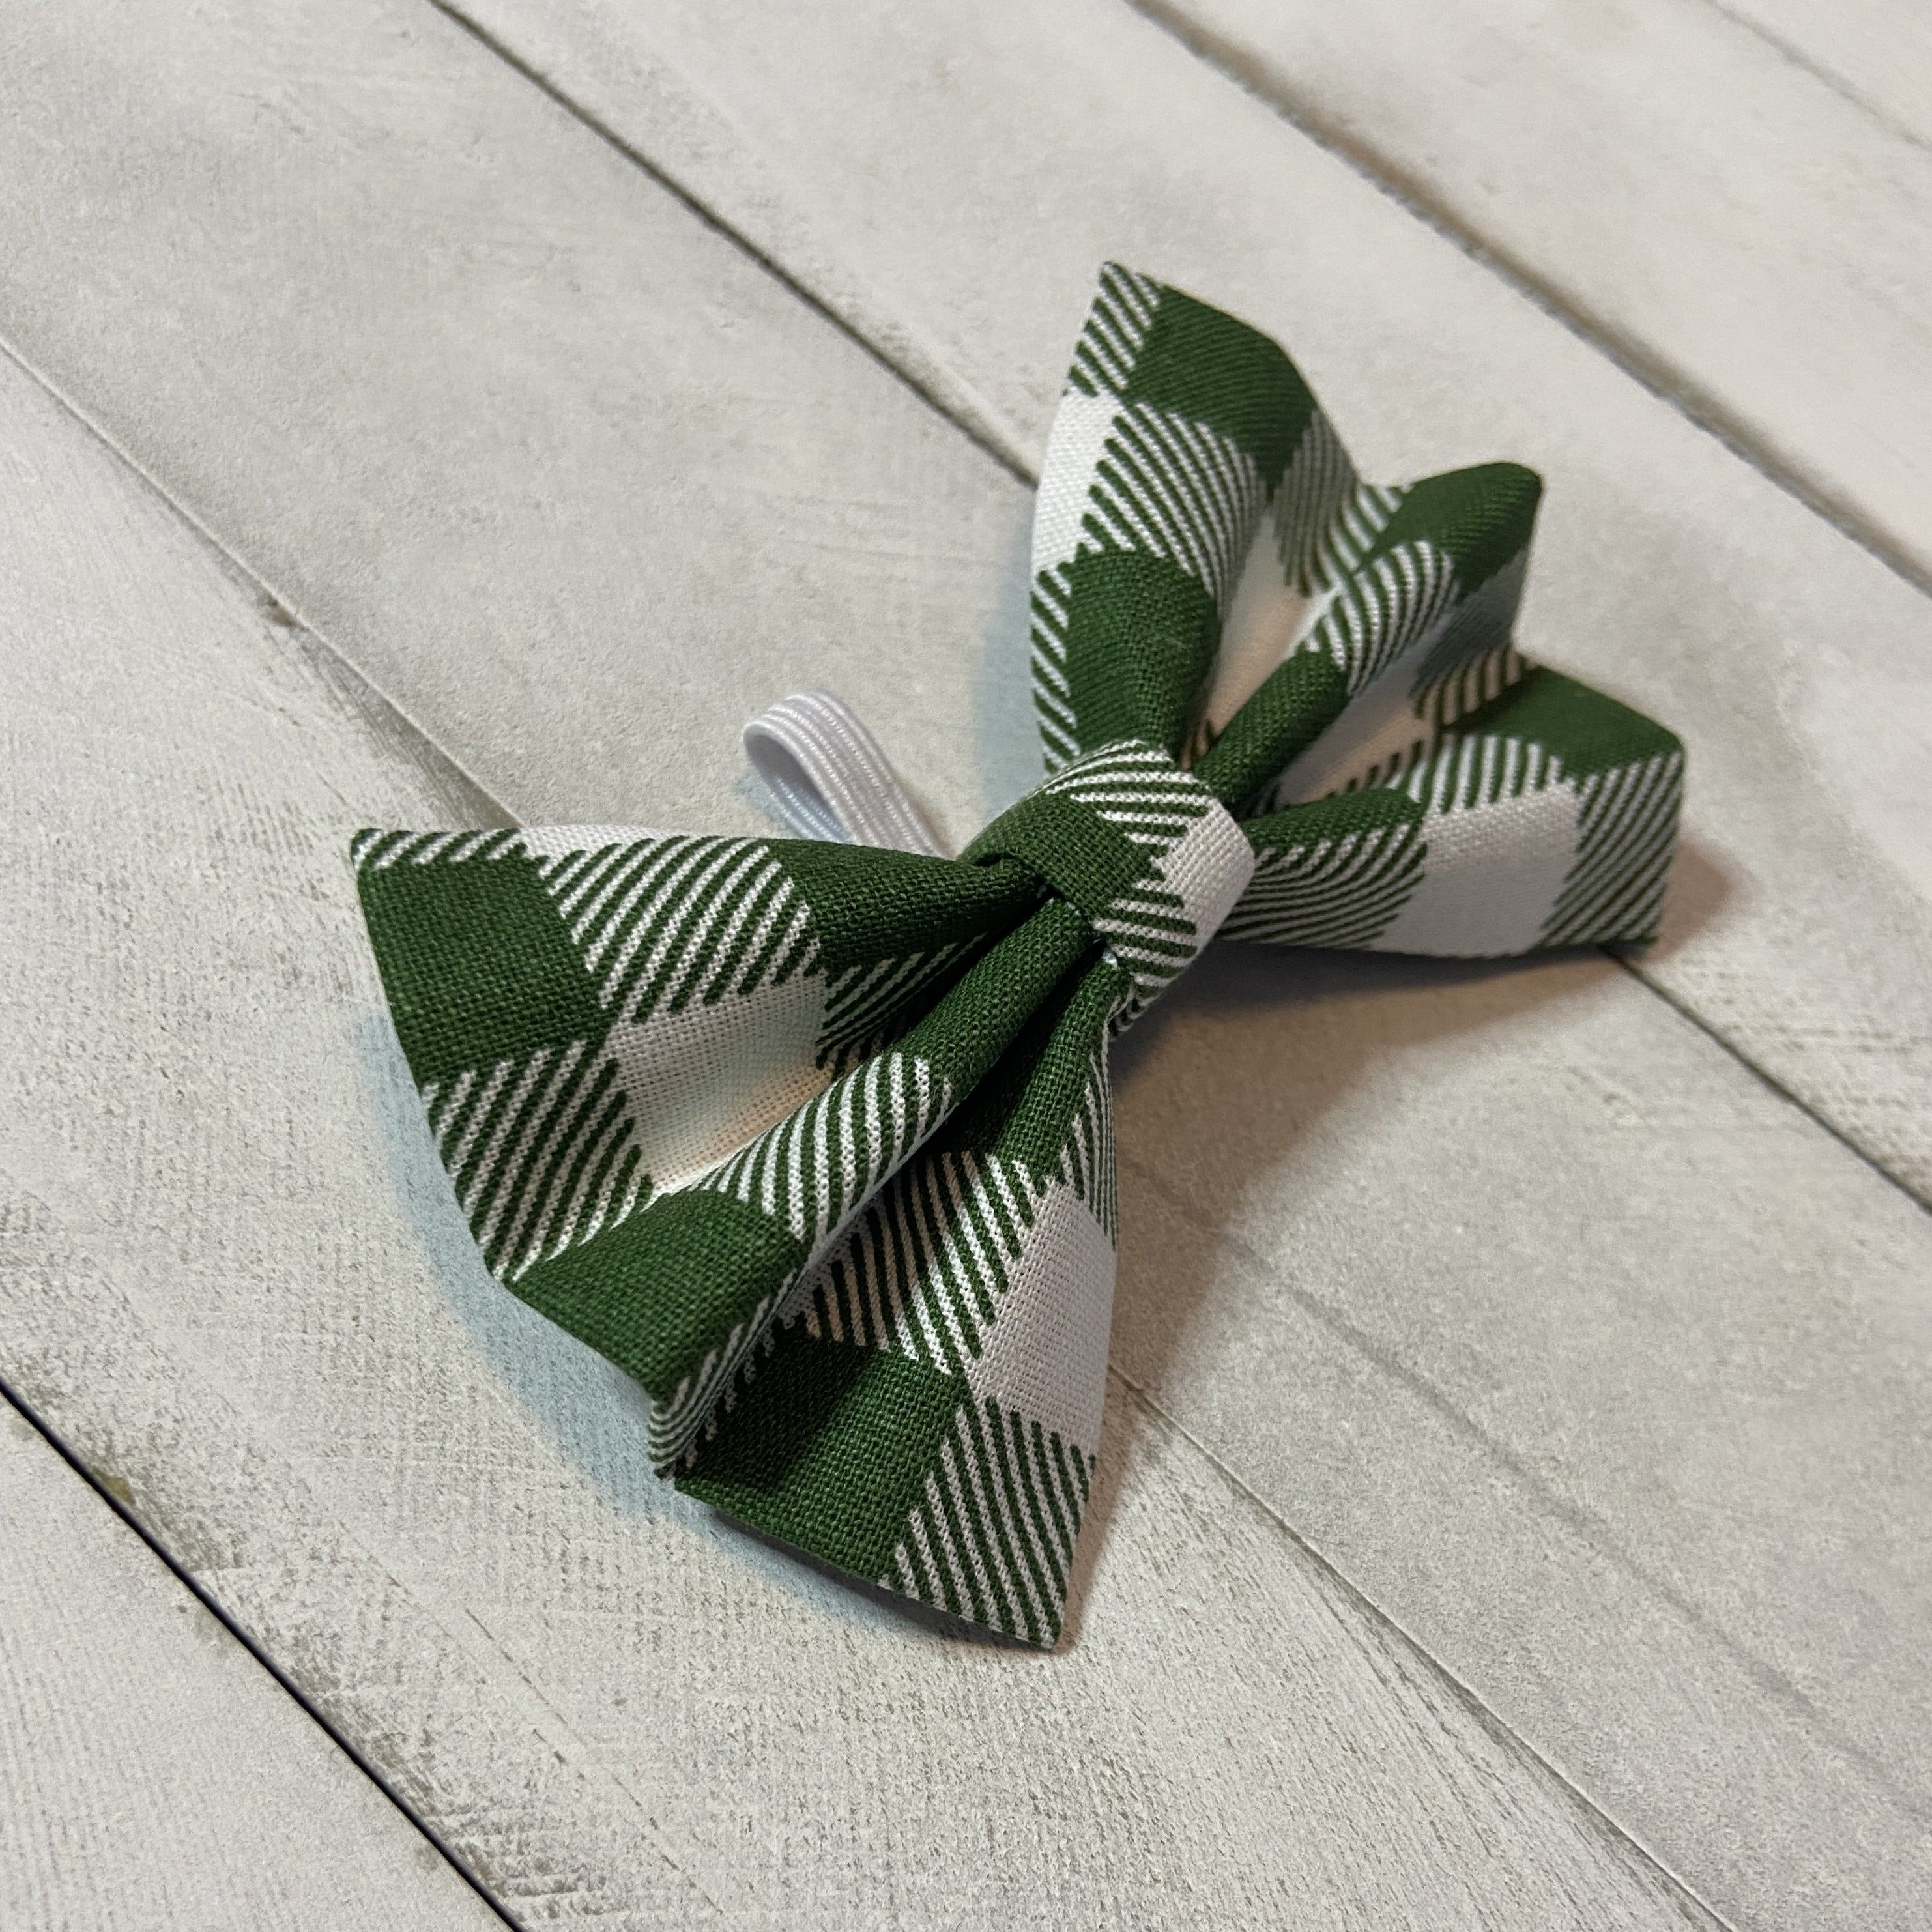 Pet Bowtie - Green & White Plaid - Christmas Bow